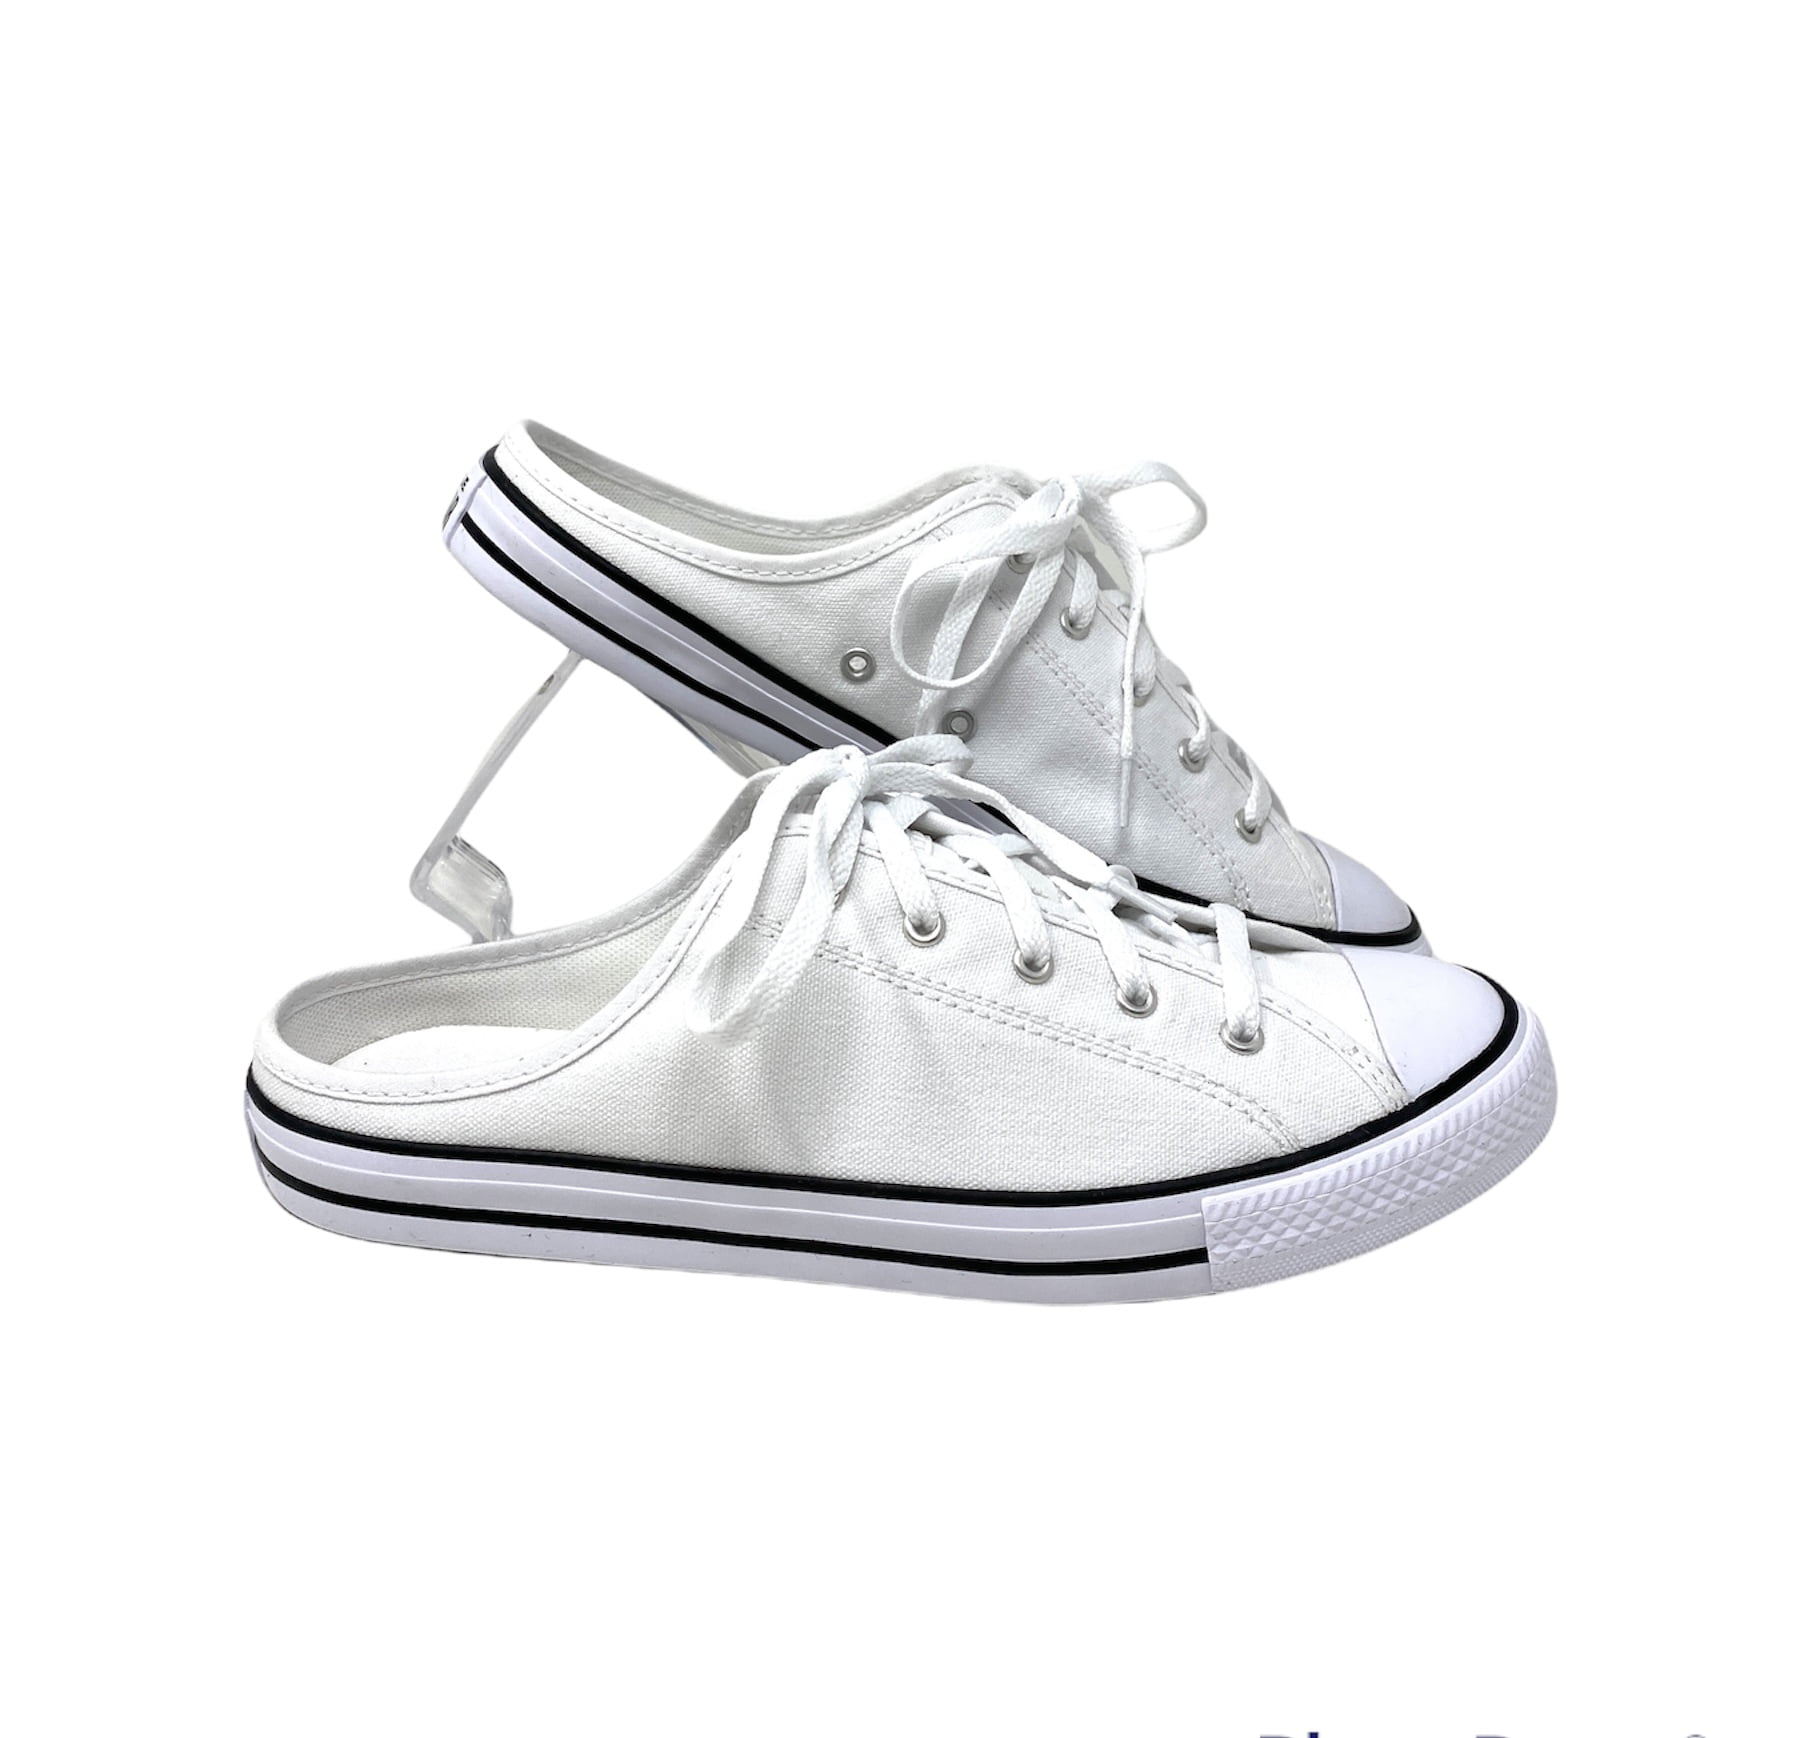 Converse All Star DAINTY Mule White Canvas Sandals Women's Size 567946F - Walmart.com